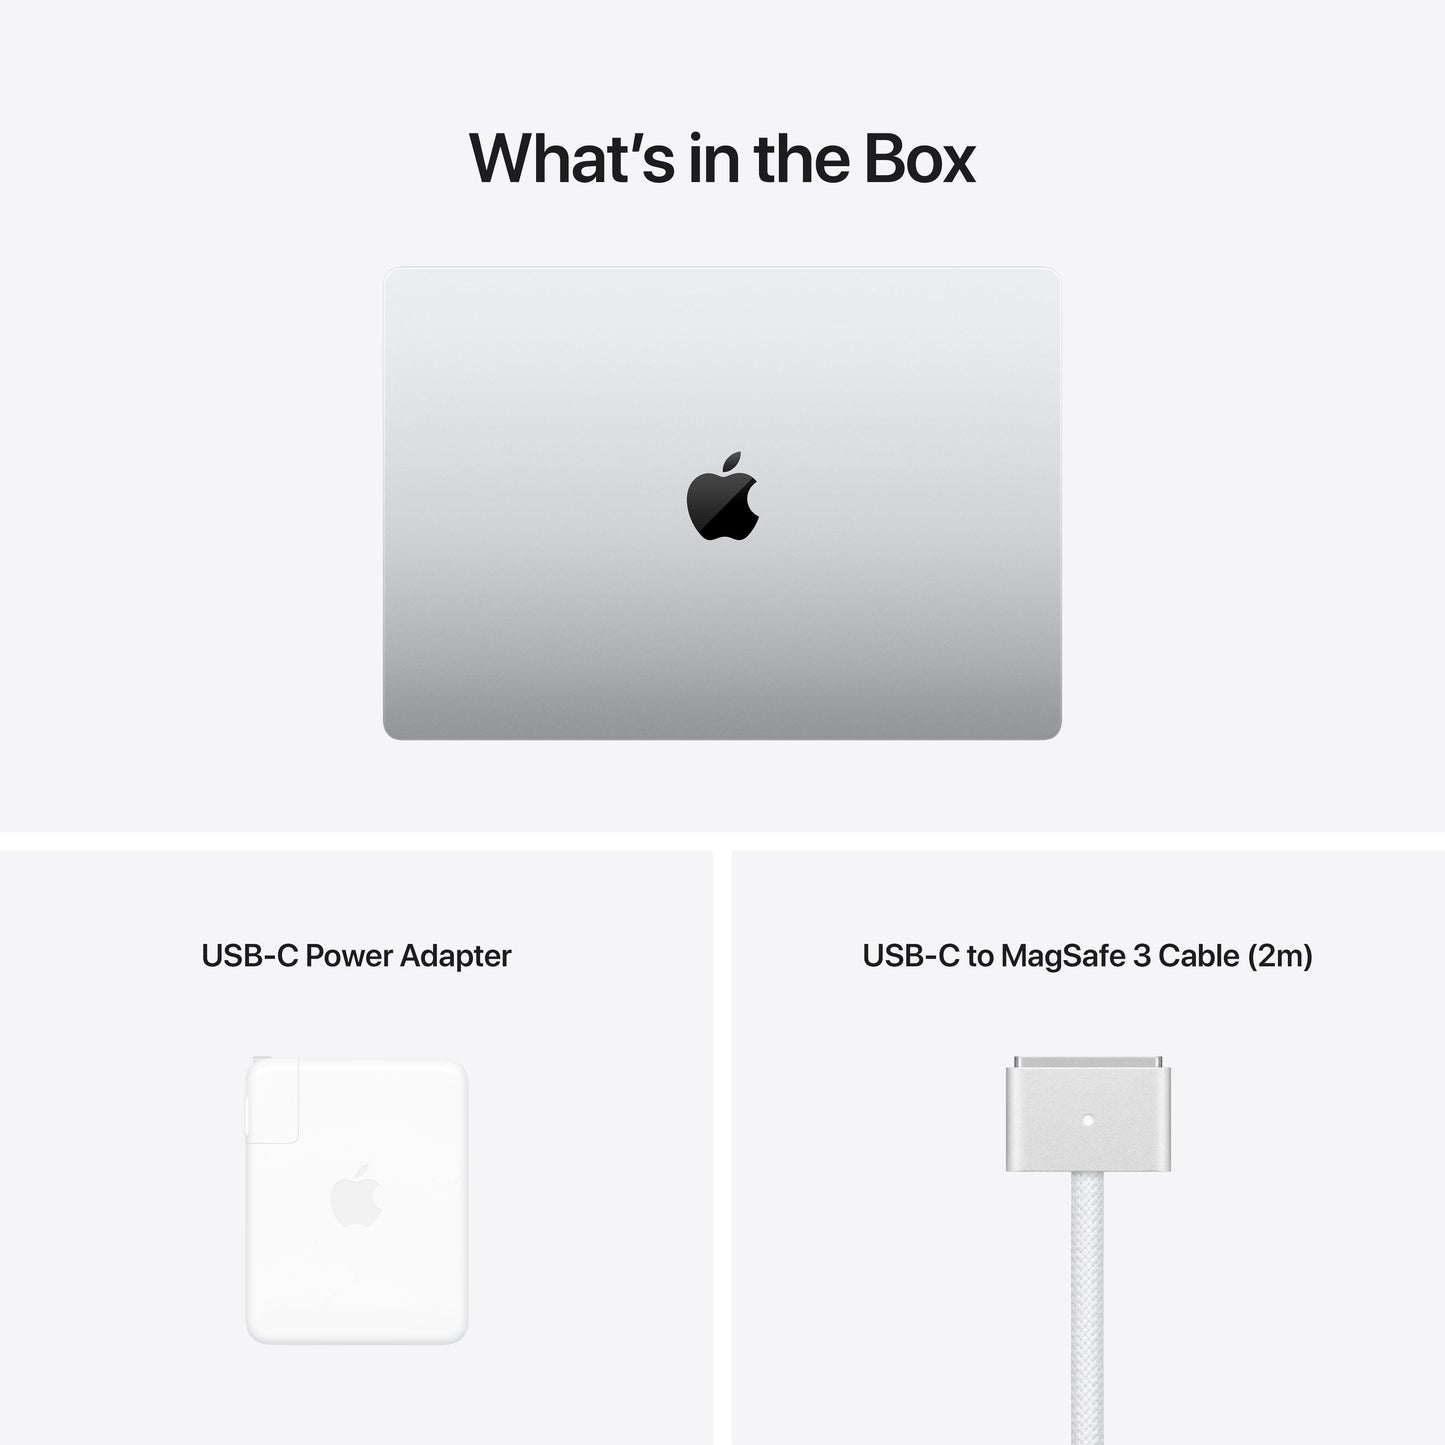 16-inch MacBook Pro: Apple M1 Pro chip with 10‑core CPU and 16‑core GPU, 1TB SSD - Silver